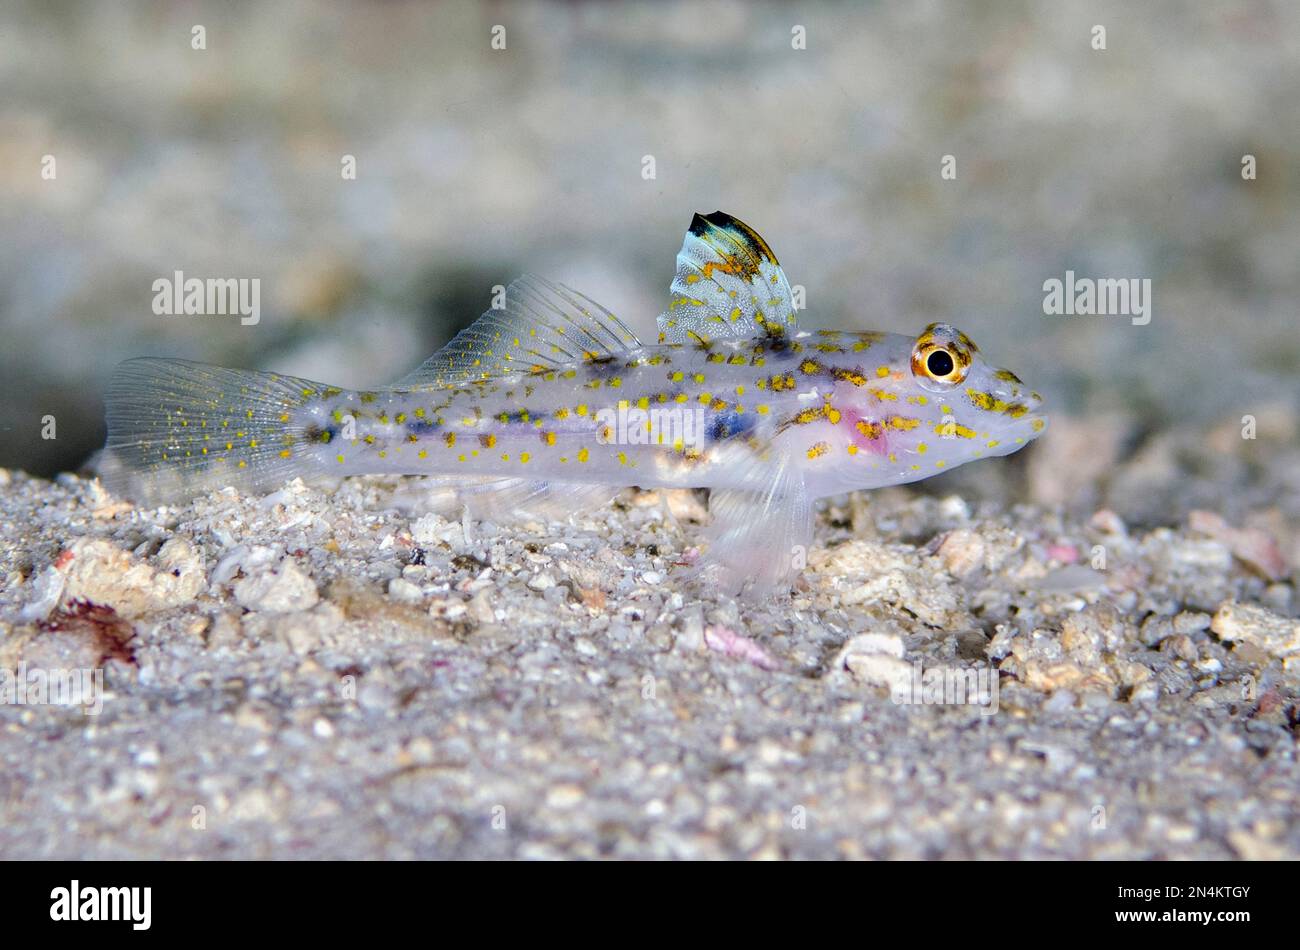 Blotched Sandgoby, Fusigobius inframaculatus, Gorango Kecil dive site, Weda, Halmahera, North Maluku, Indonesia, Halmahera Sea Stock Photo